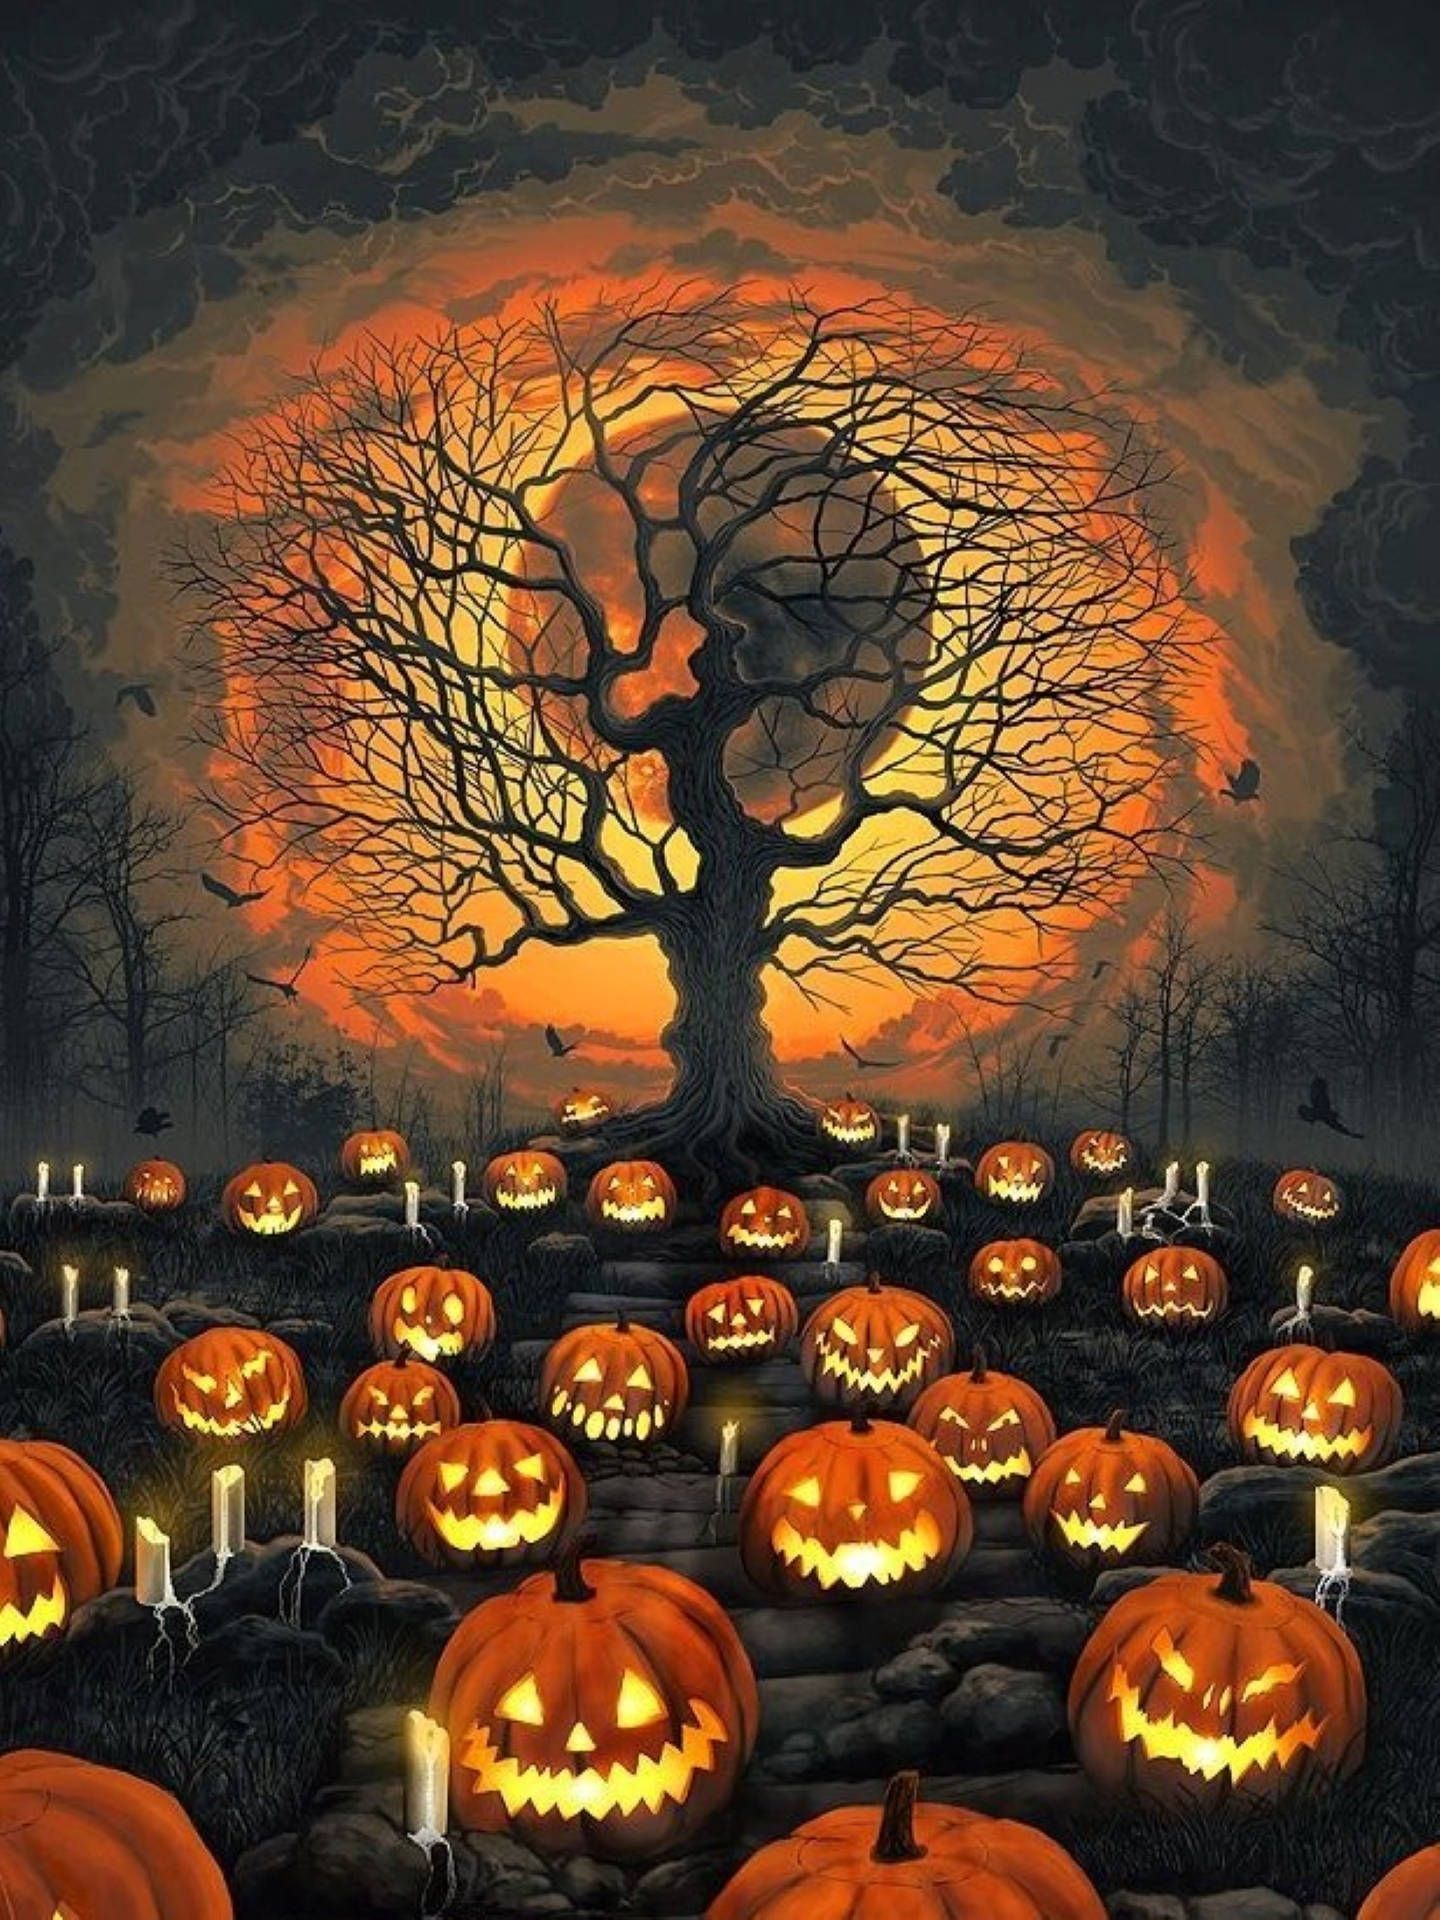 Halloween pumpkins with candles in front of a tree. - Halloween, dark orange